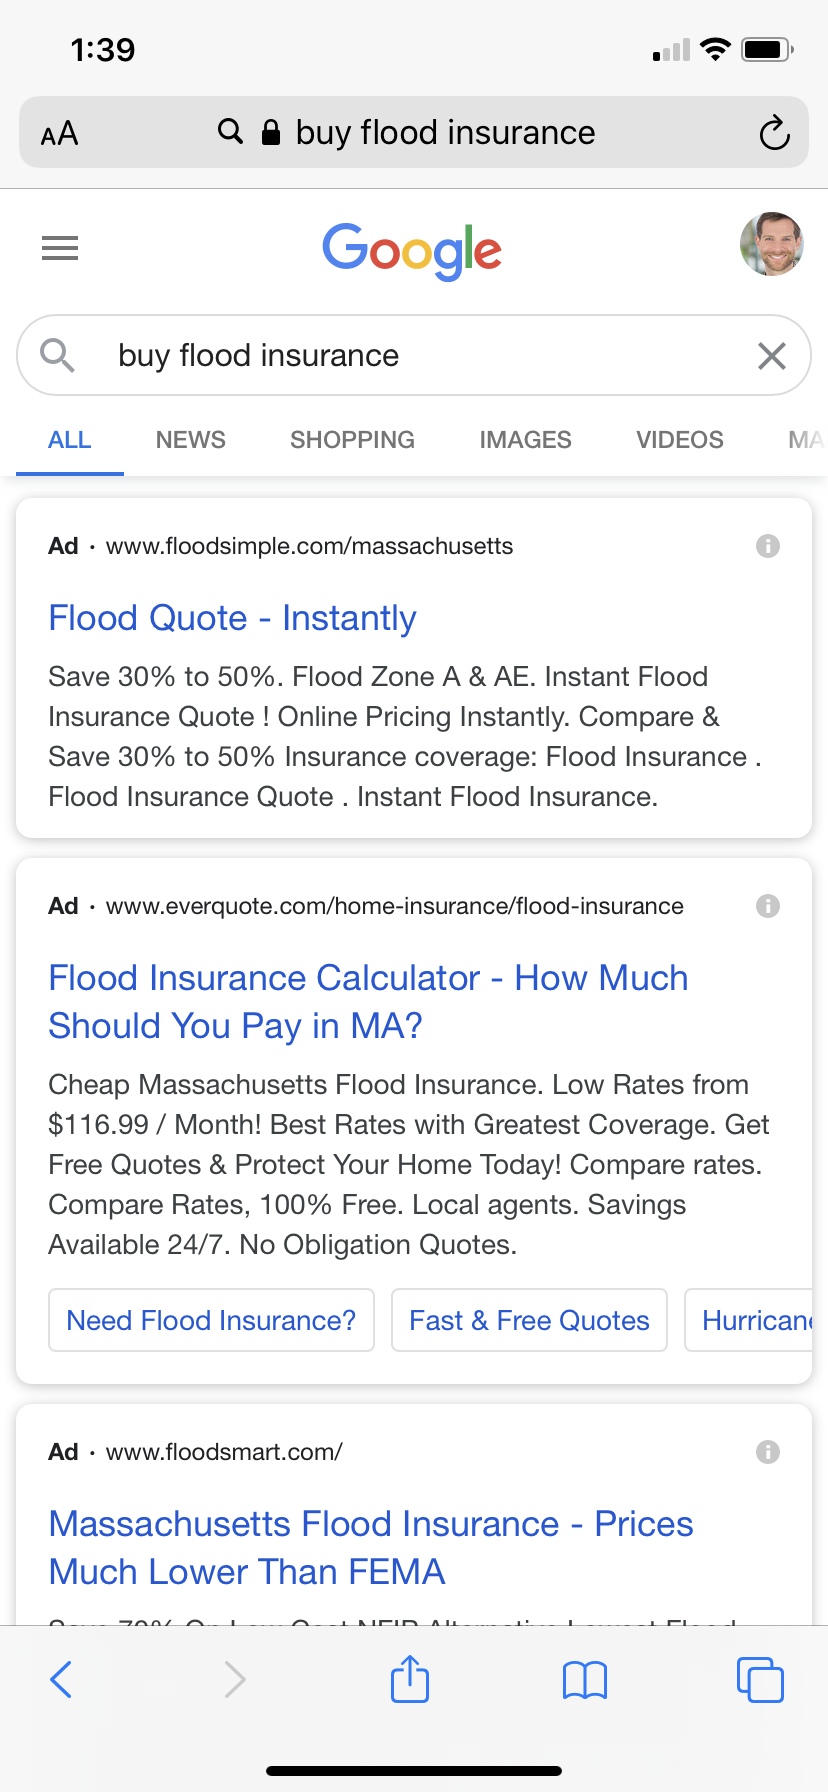 Flood insurance PPC ads on Google